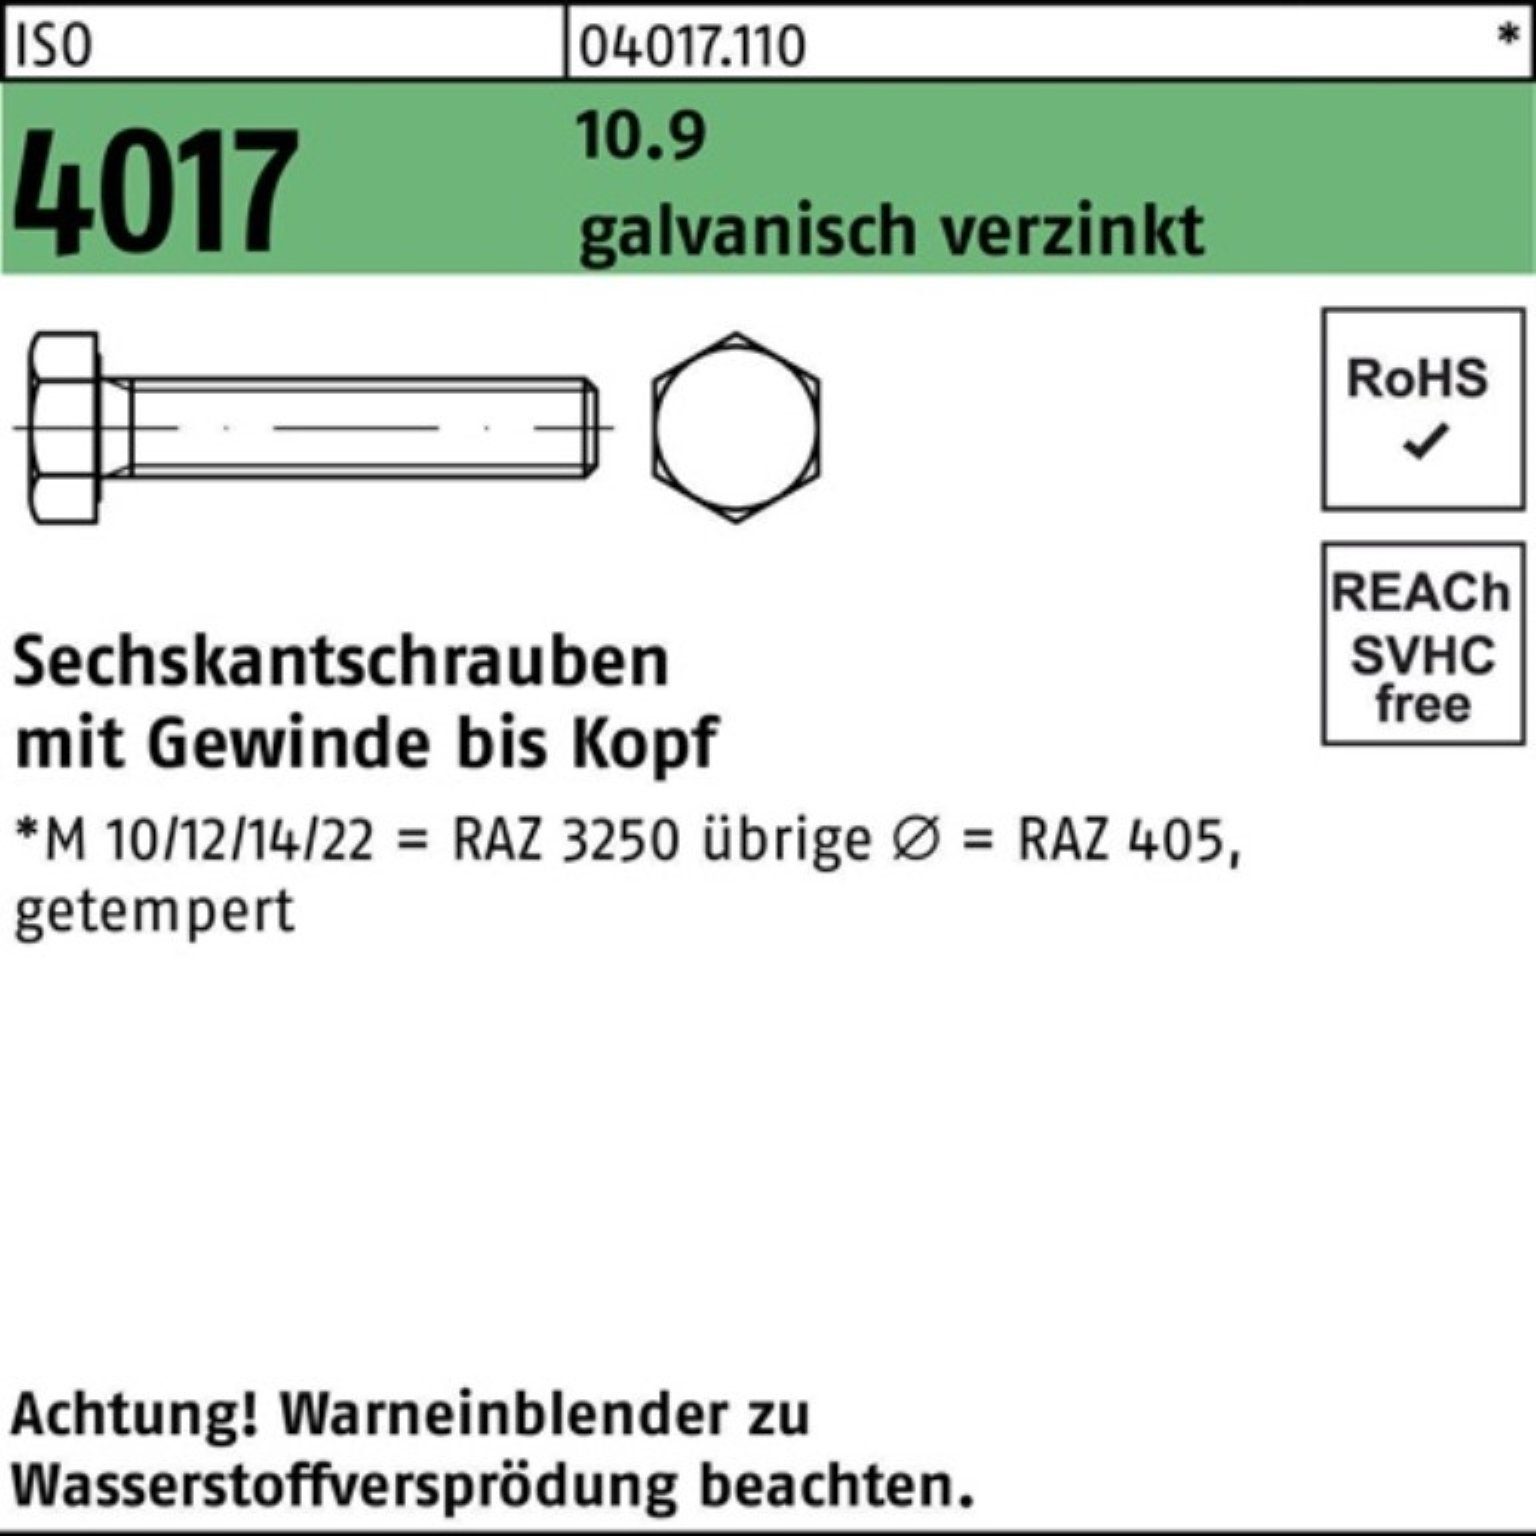 VG S 100 Bufab Sechskantschraube galv.verz. 10.9 Sechskantschraube 100er M12x 4017 ISO 50 Pack